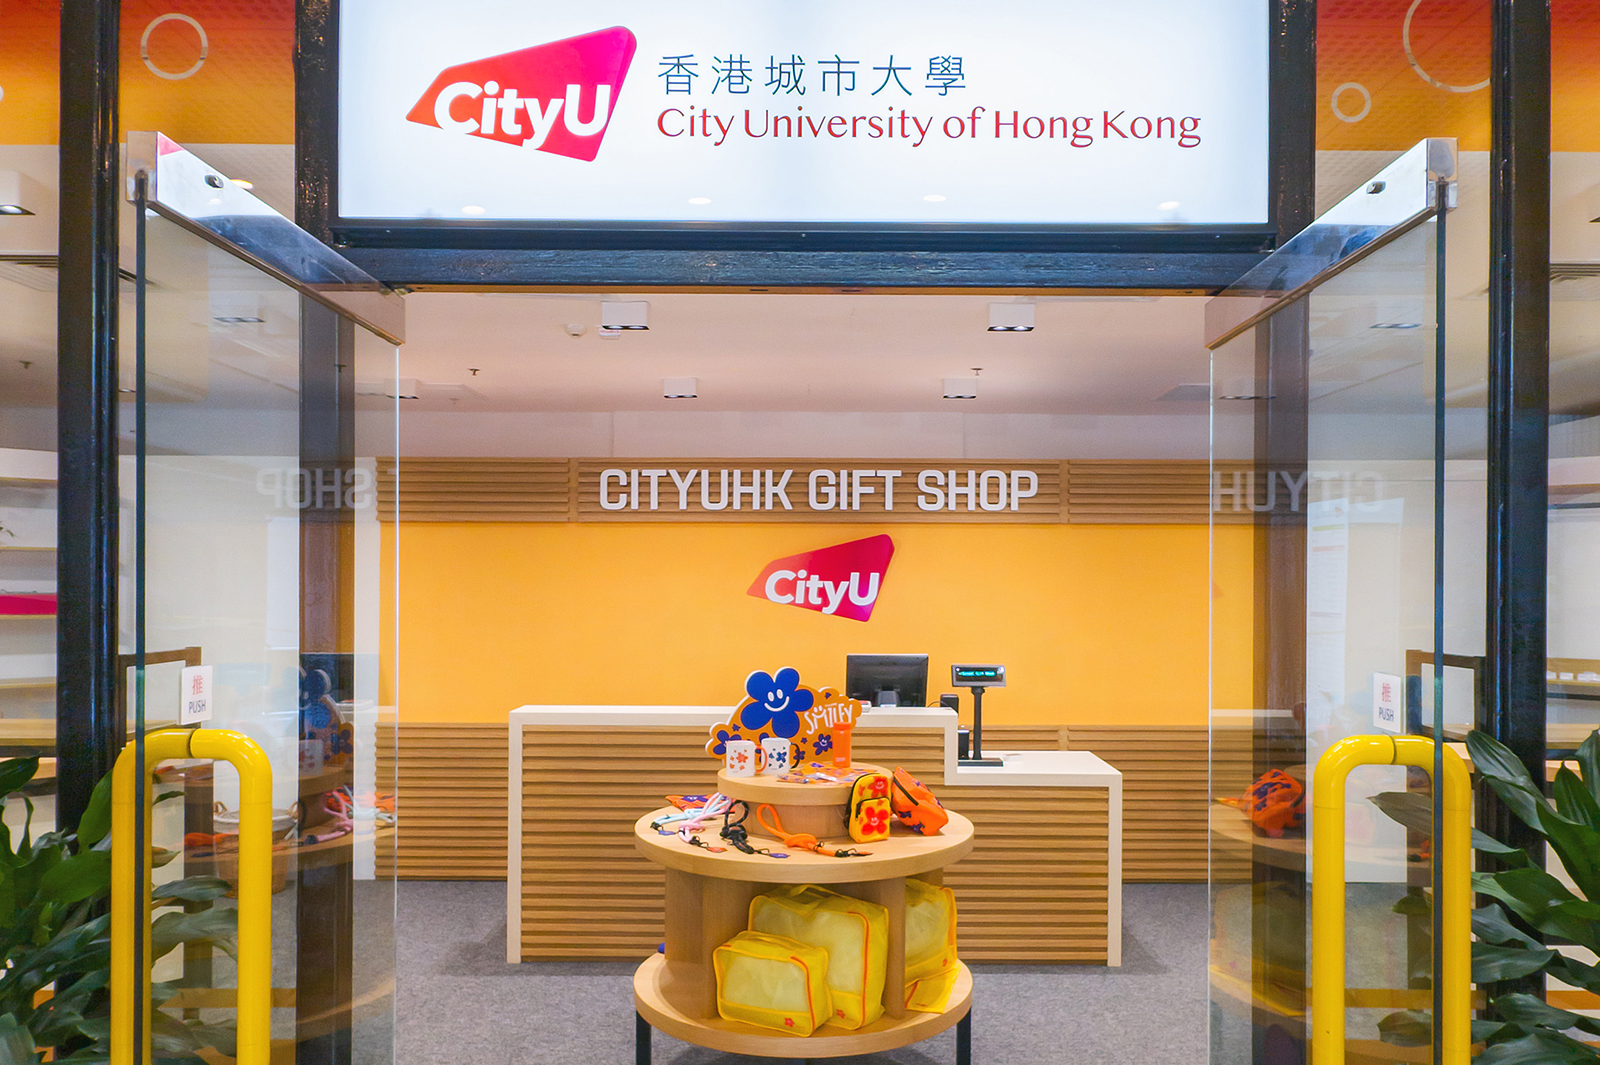 The CityUHK Gift Shop